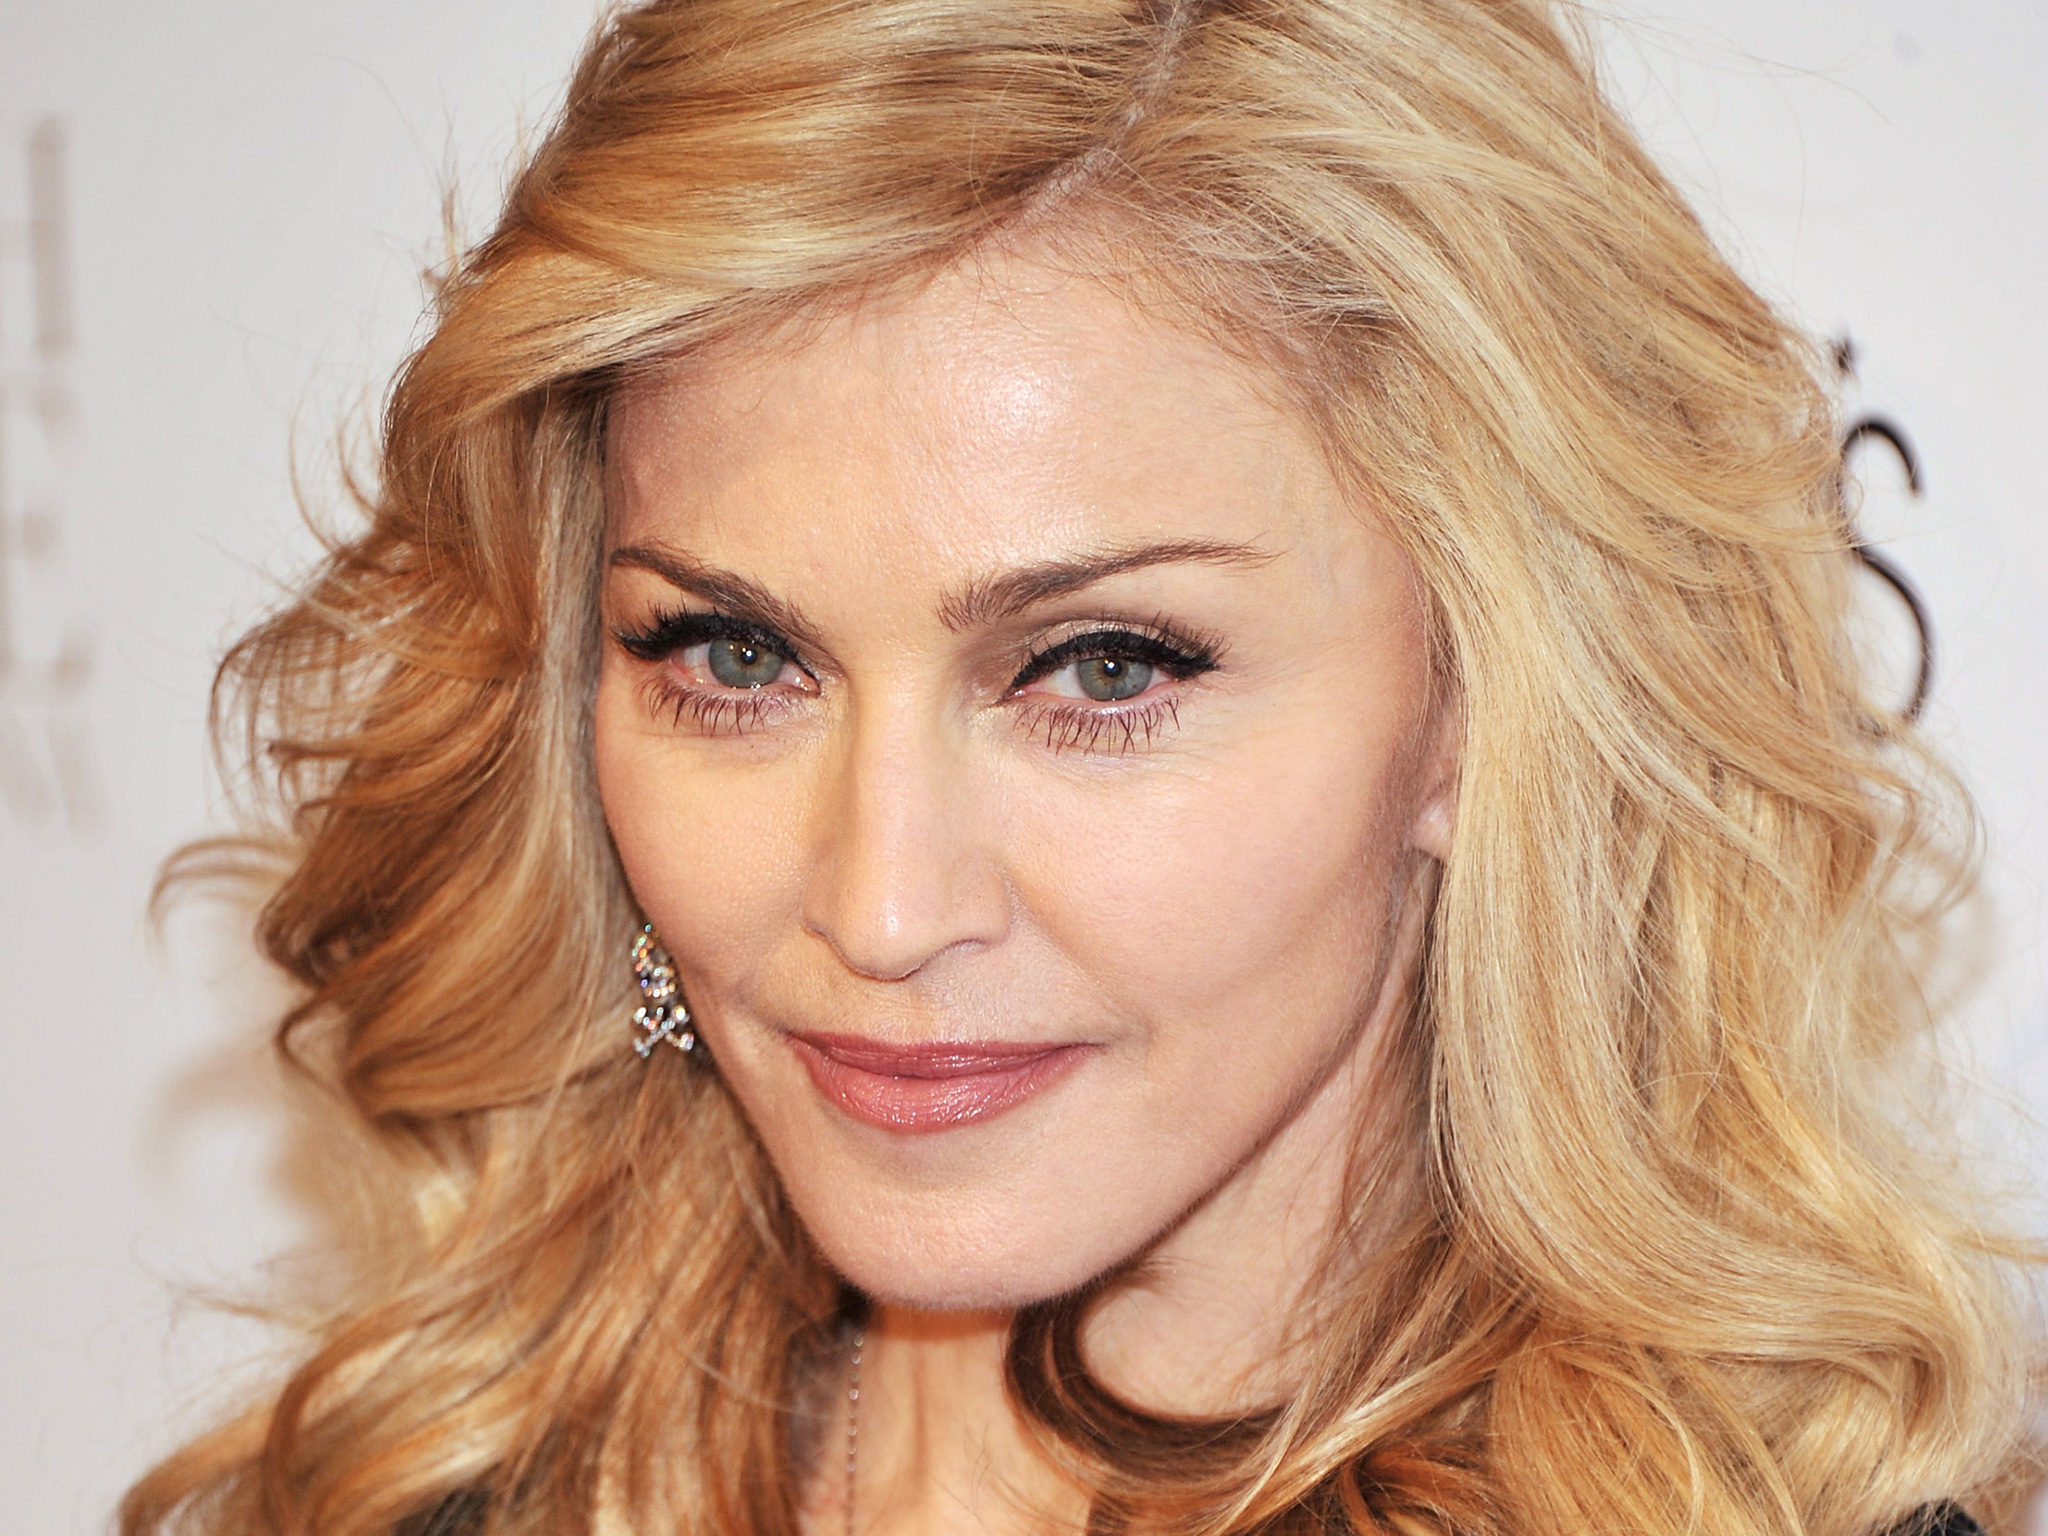 Madonna #4